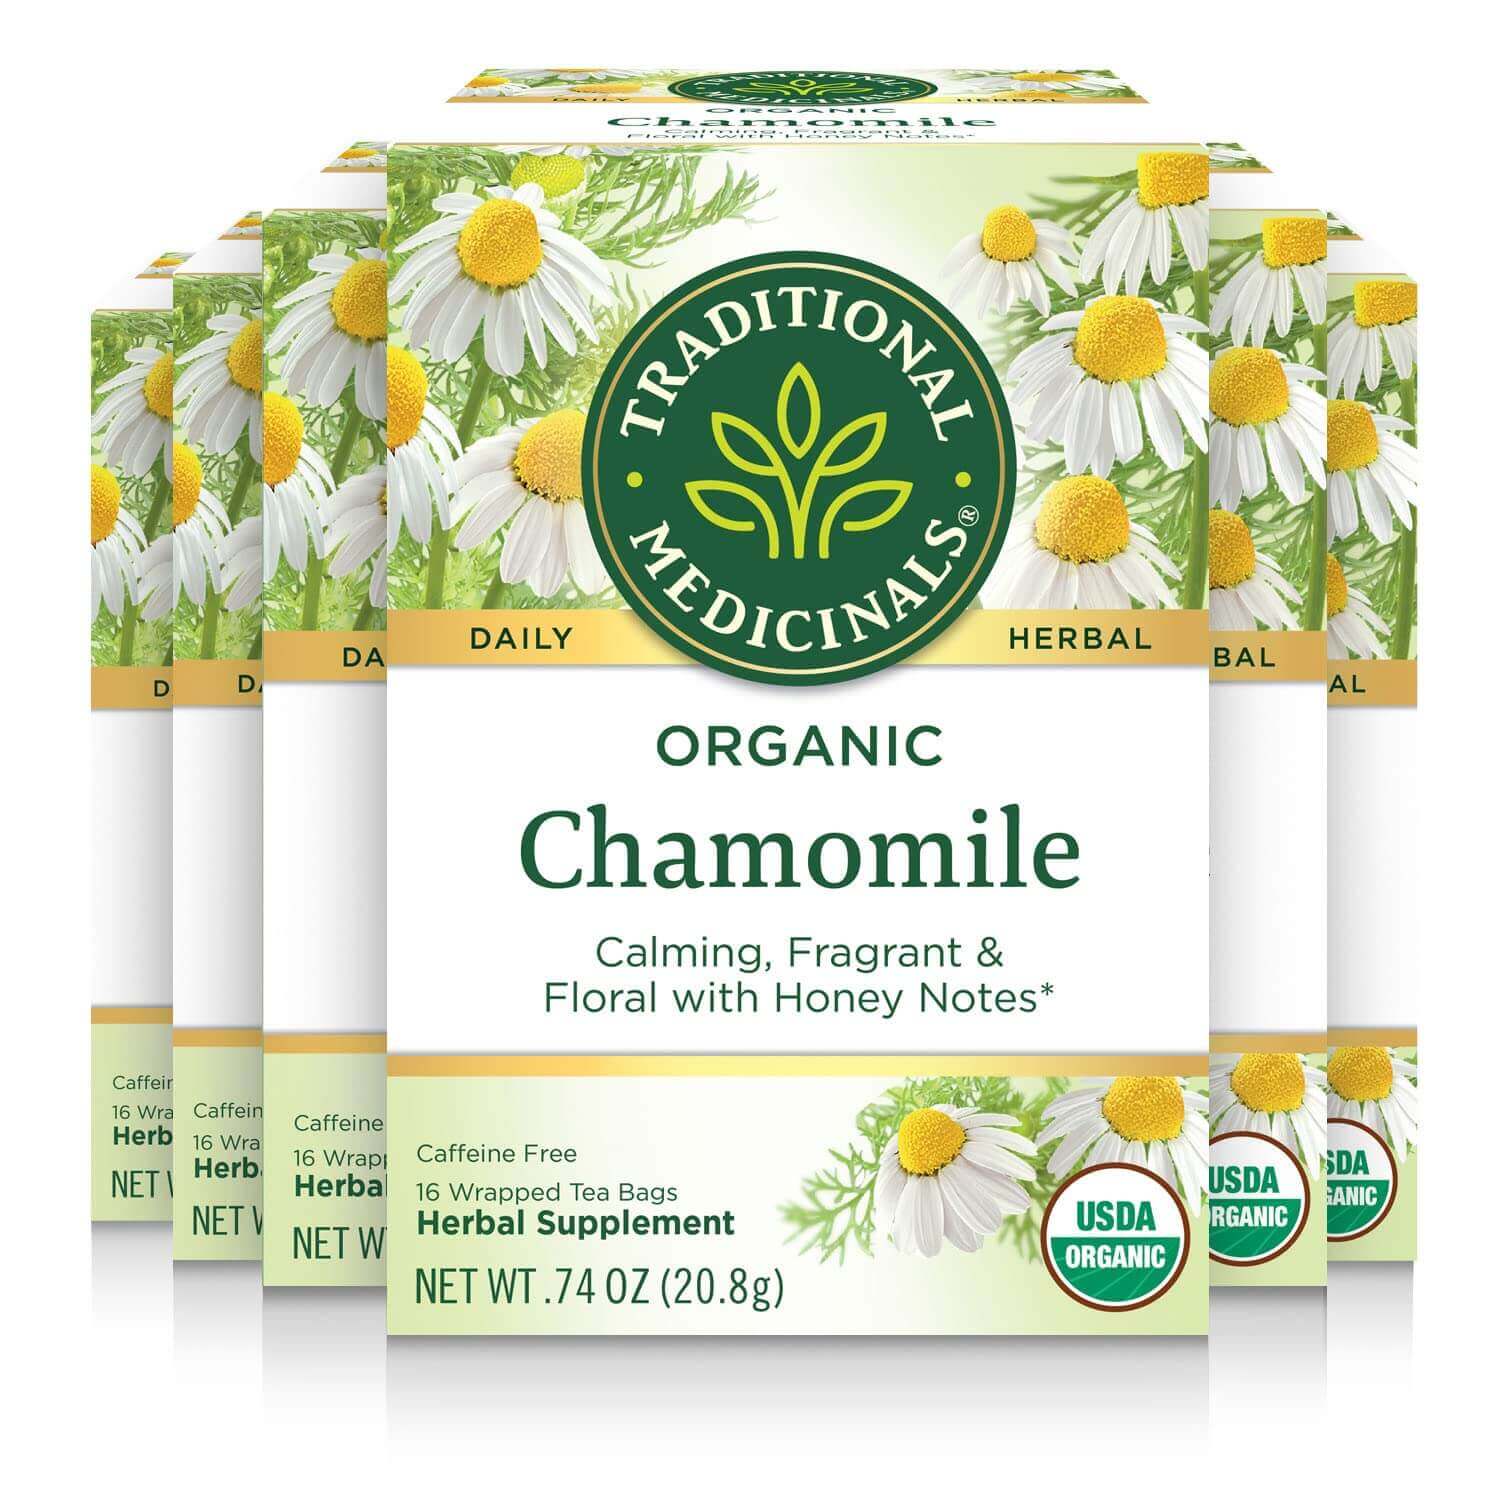 Amazon’s Best Selling Chamomile Tea: Traditional Medicinals Organic Chamomile